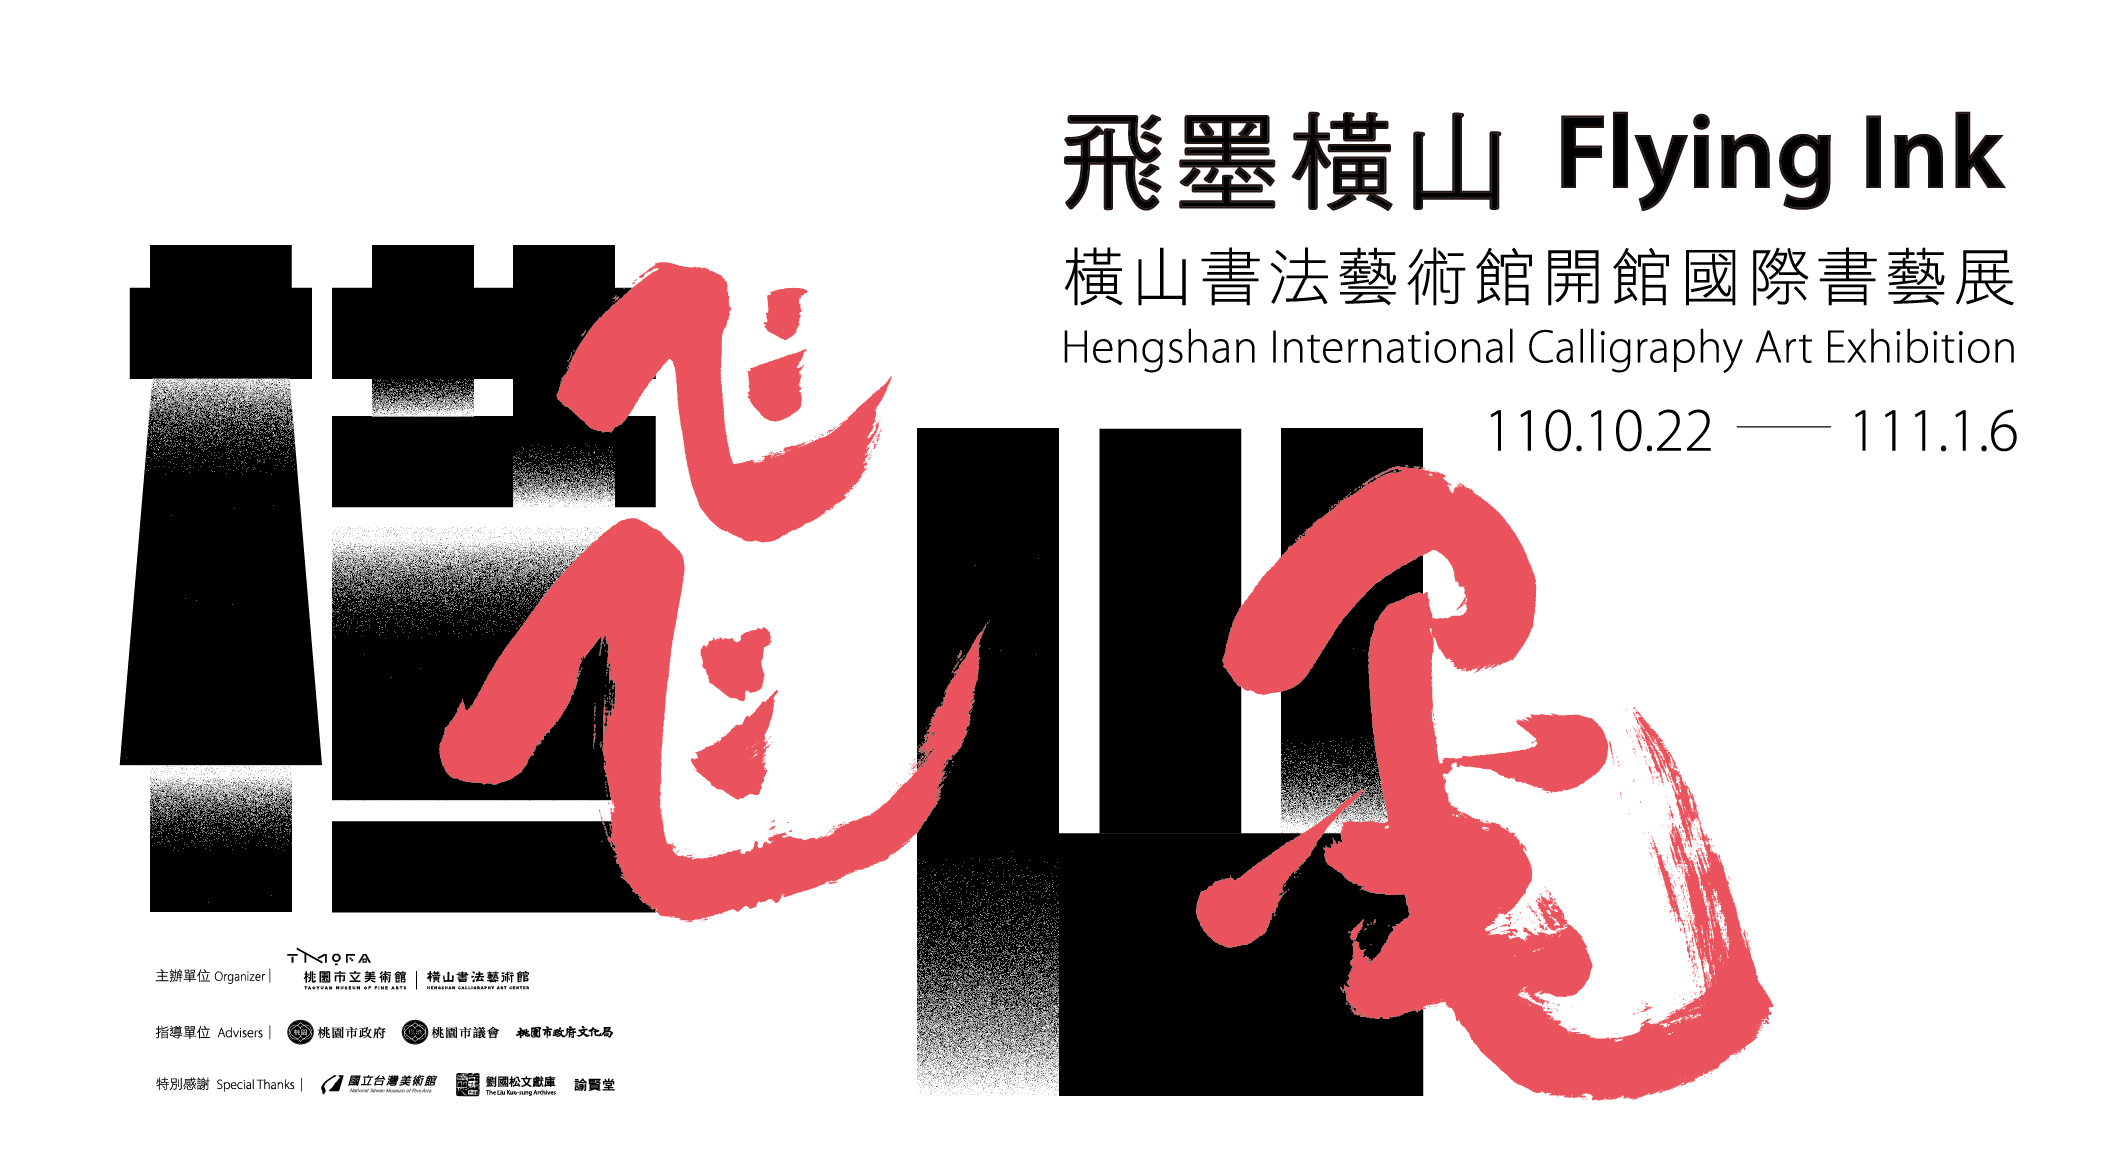 Flying Ink: Hengshan International Calligraphy Art Exhibition